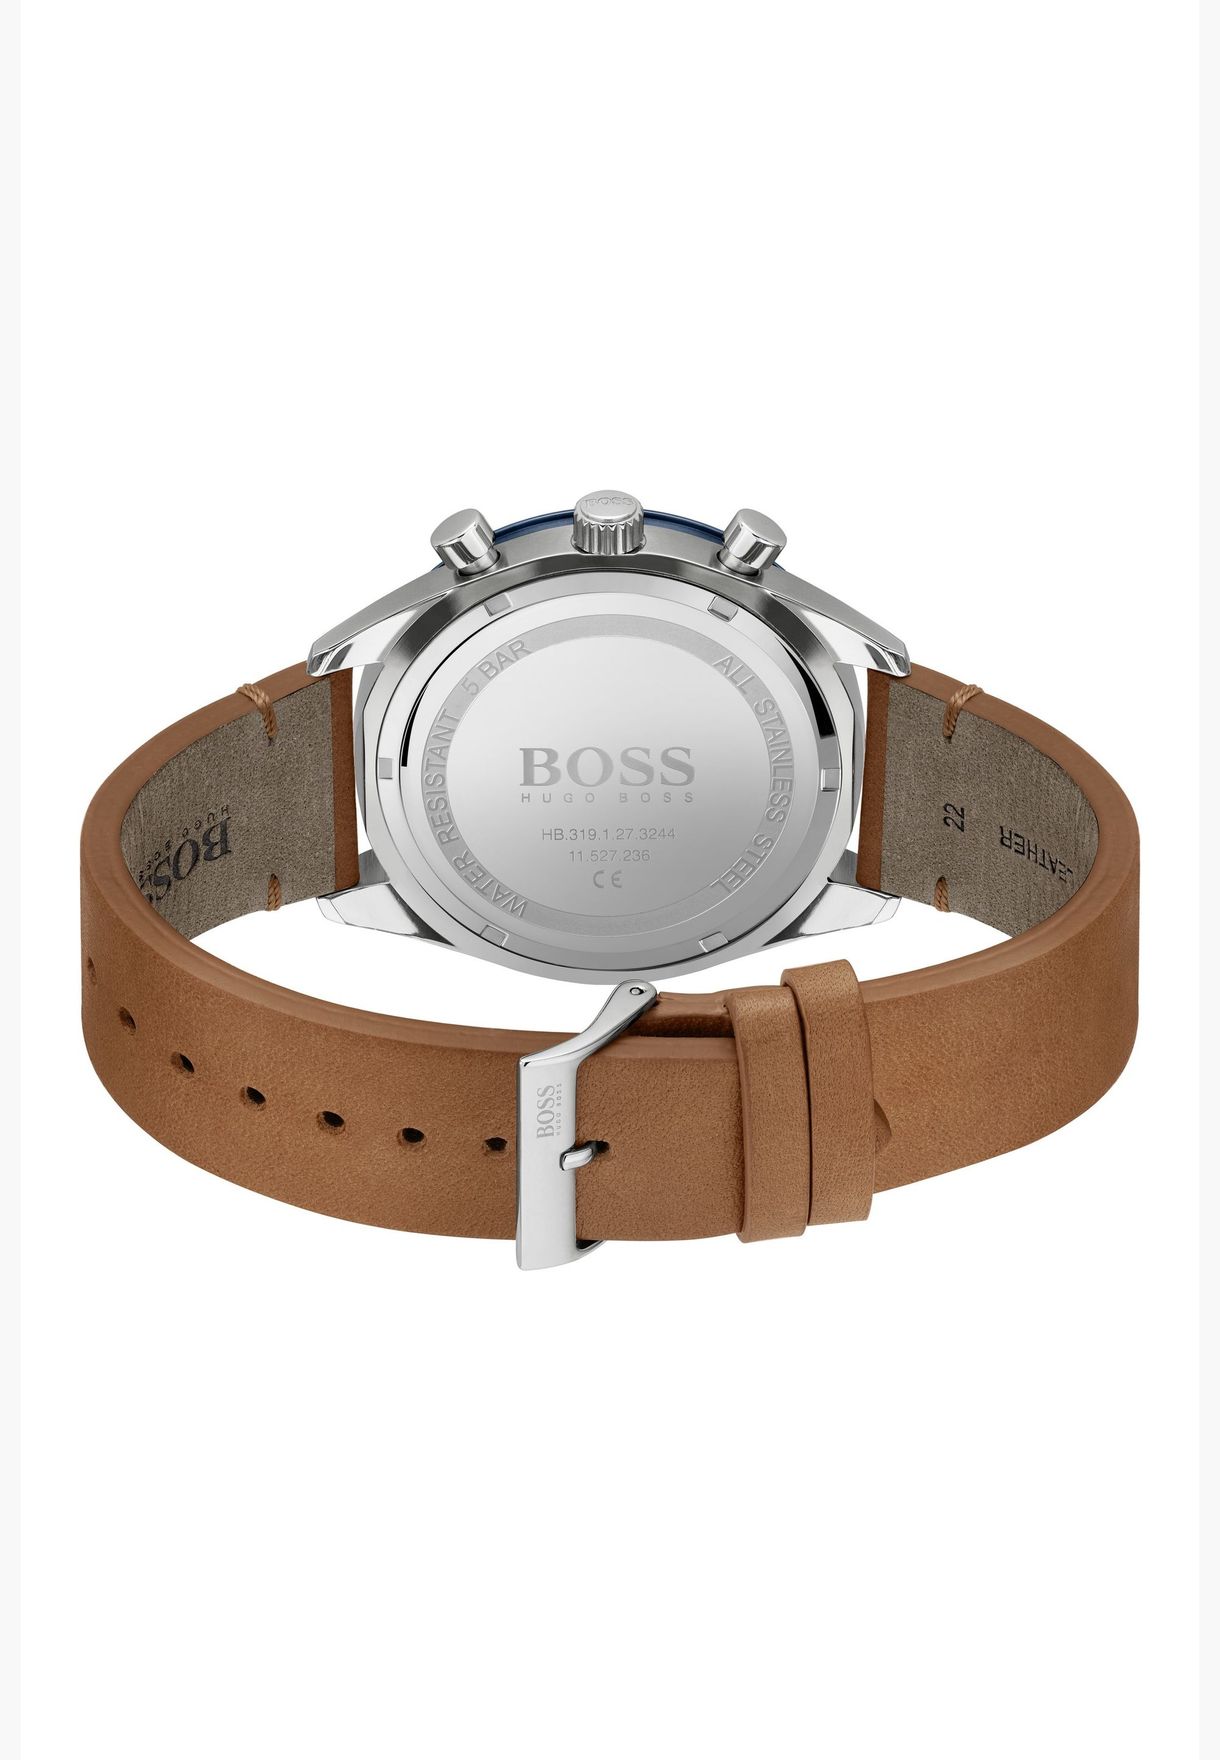 Hugo Boss SANTIAGO Leather Watch for men - 1513860